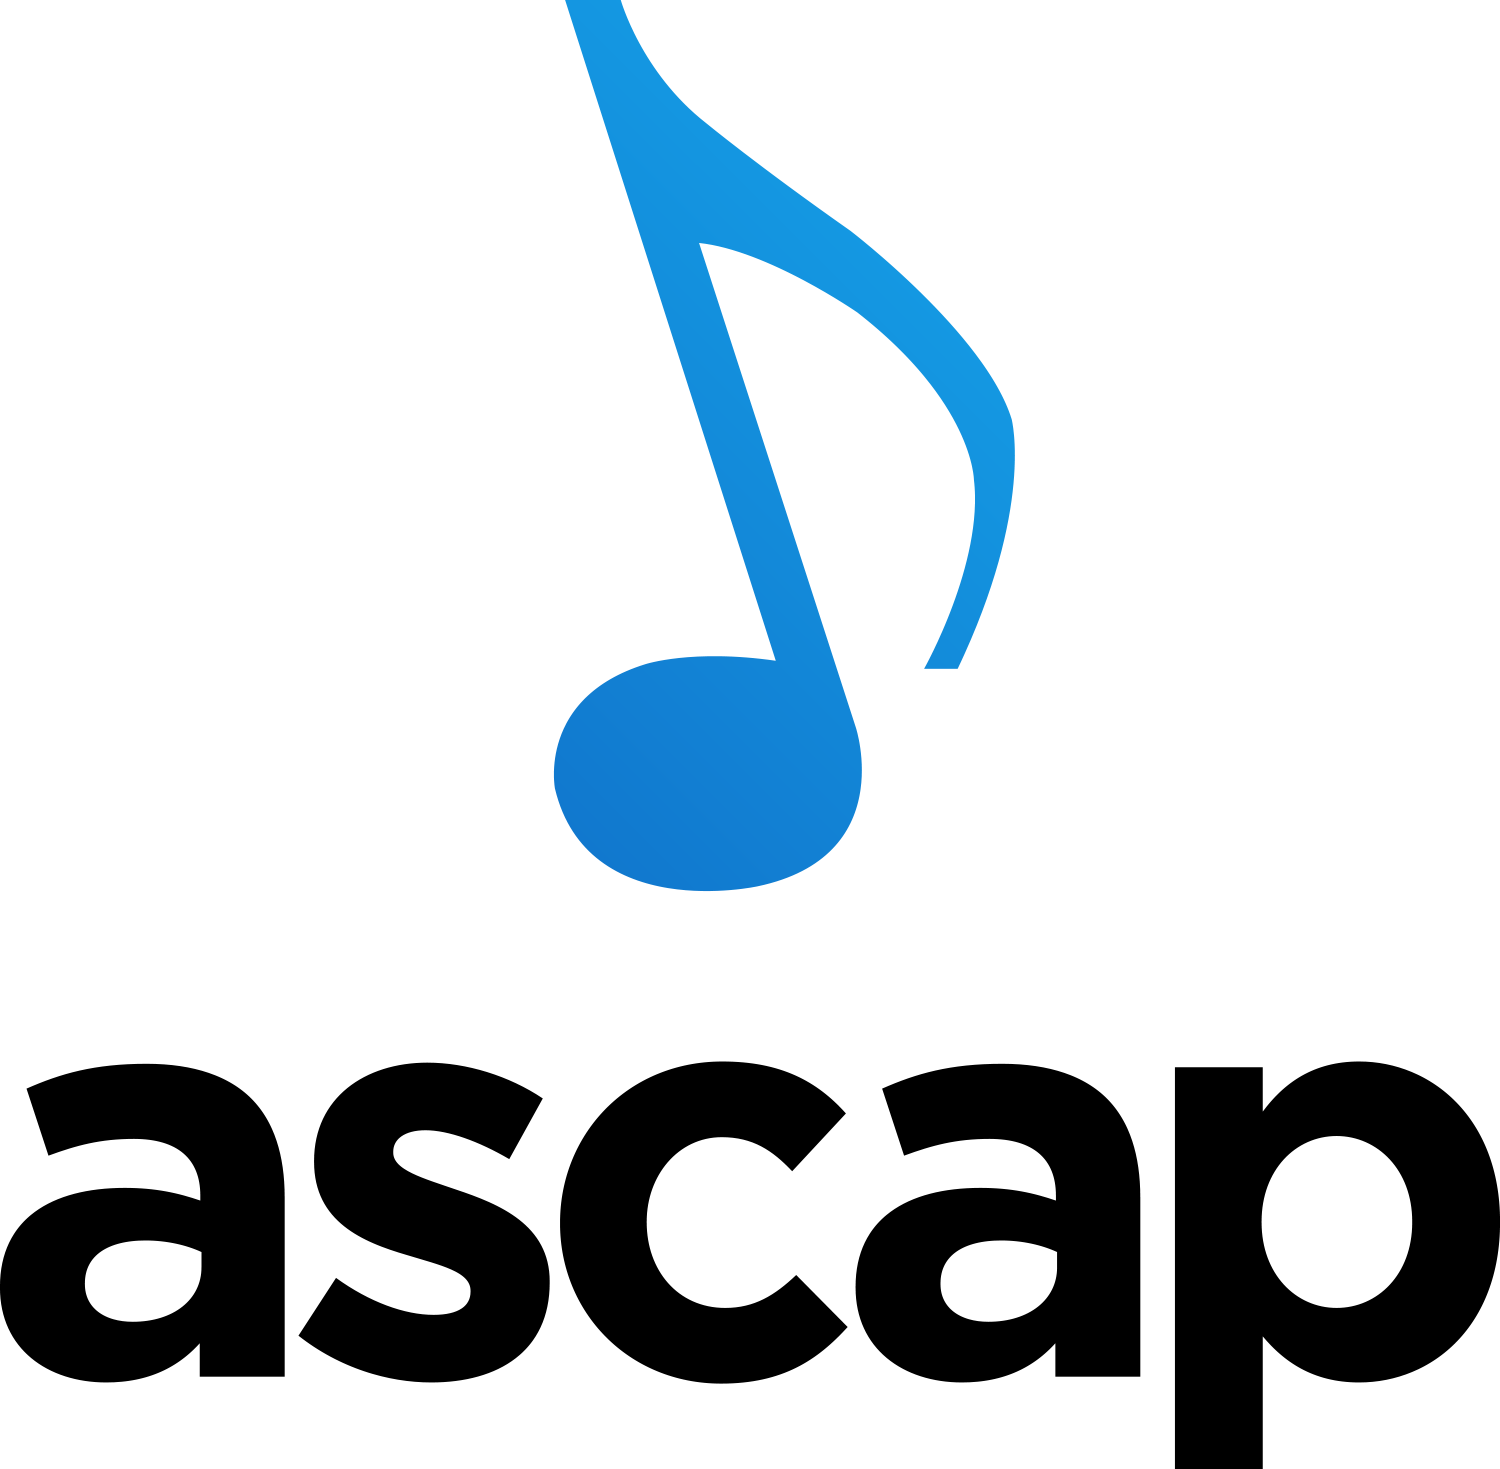 ASCAP logo.png